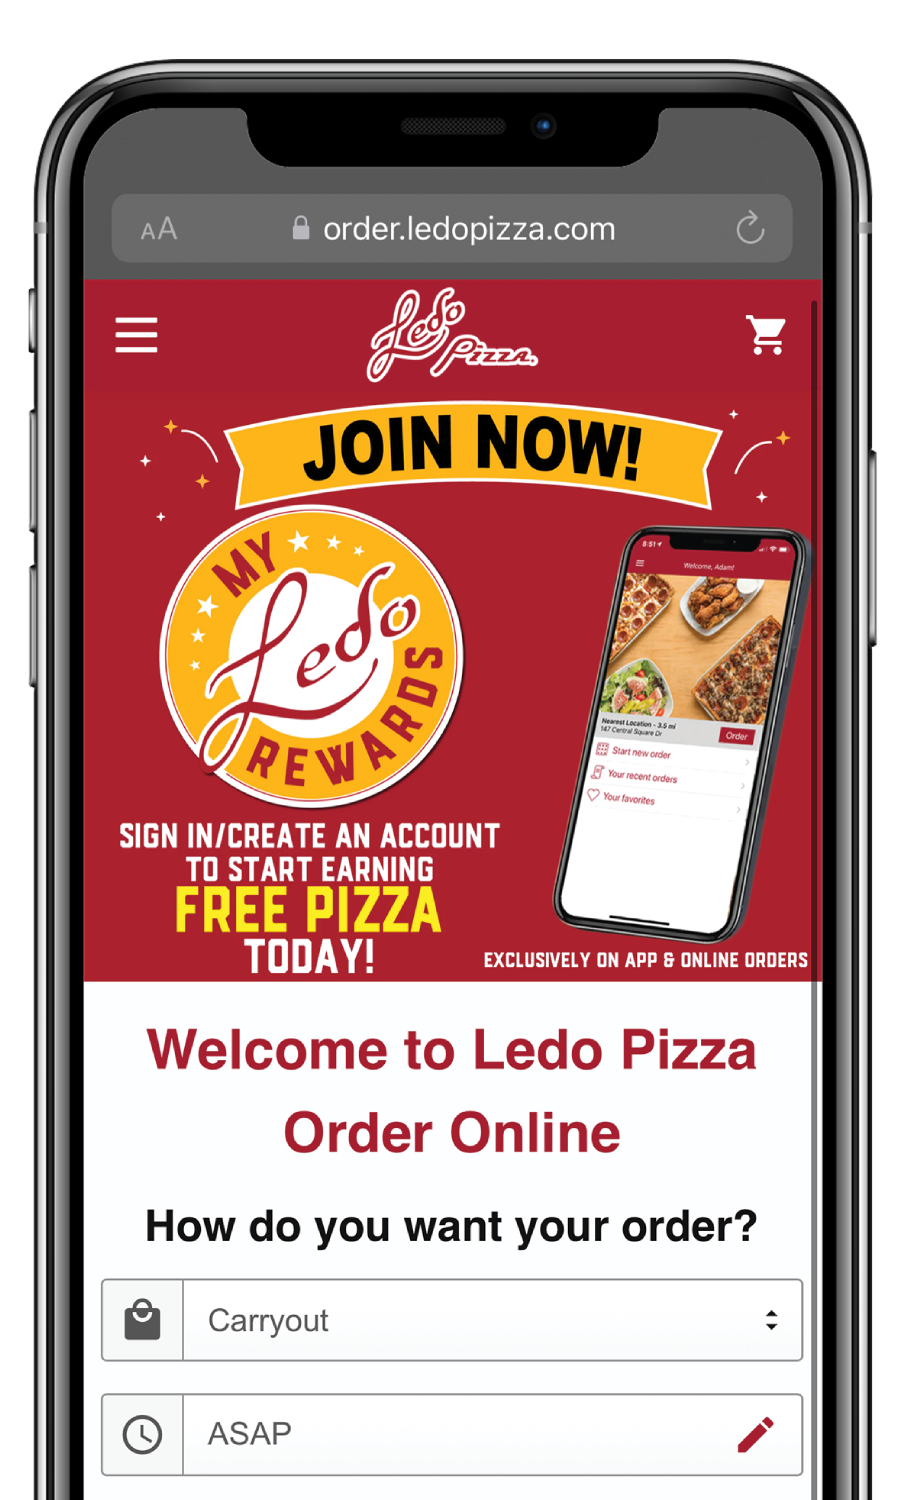 Mobile Phone view of Ledo Pizza's Online Ordering website.